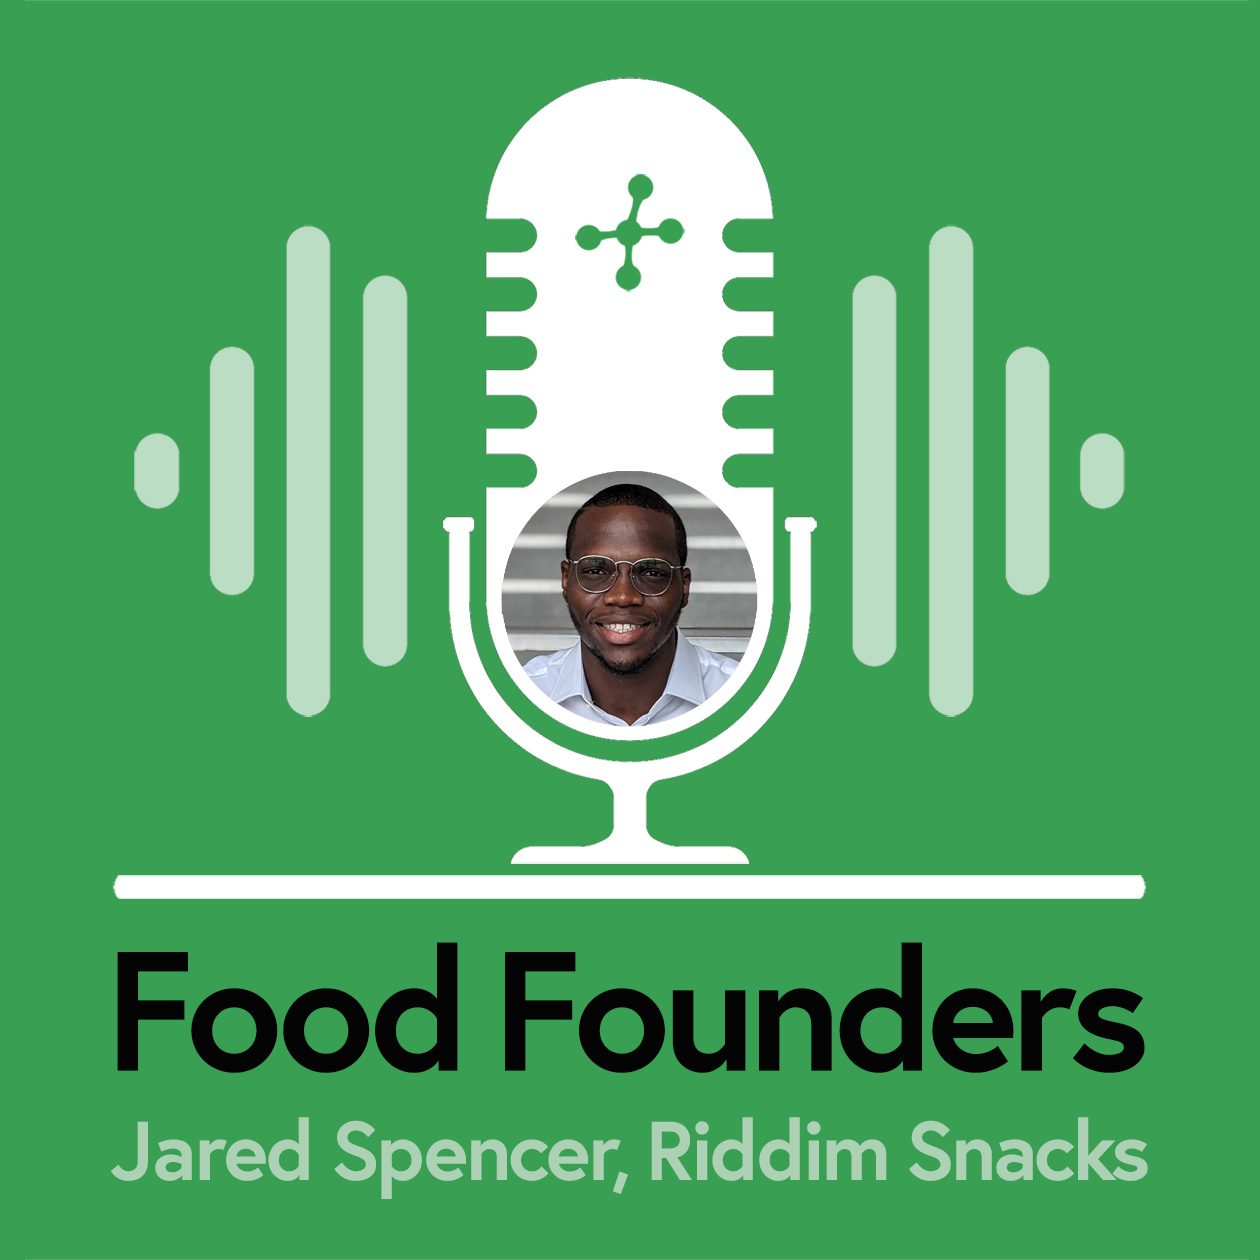 Riddim Snacks: Caribbean-inspired, Vegan and inclusive